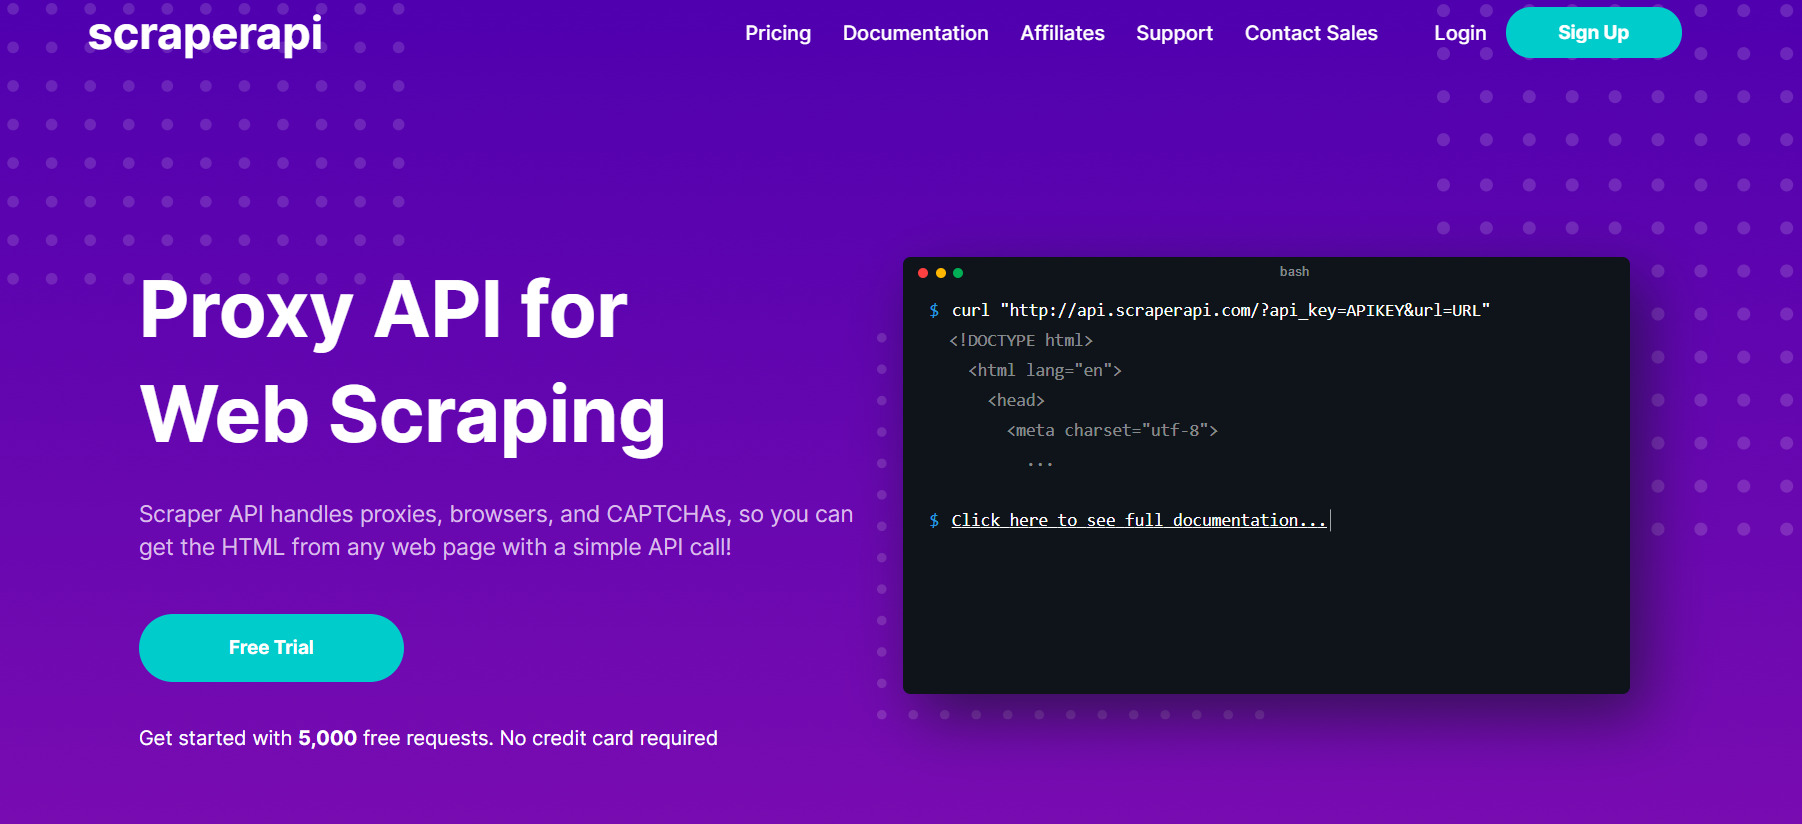 Scraper API - The Proxy API For Web Scraping